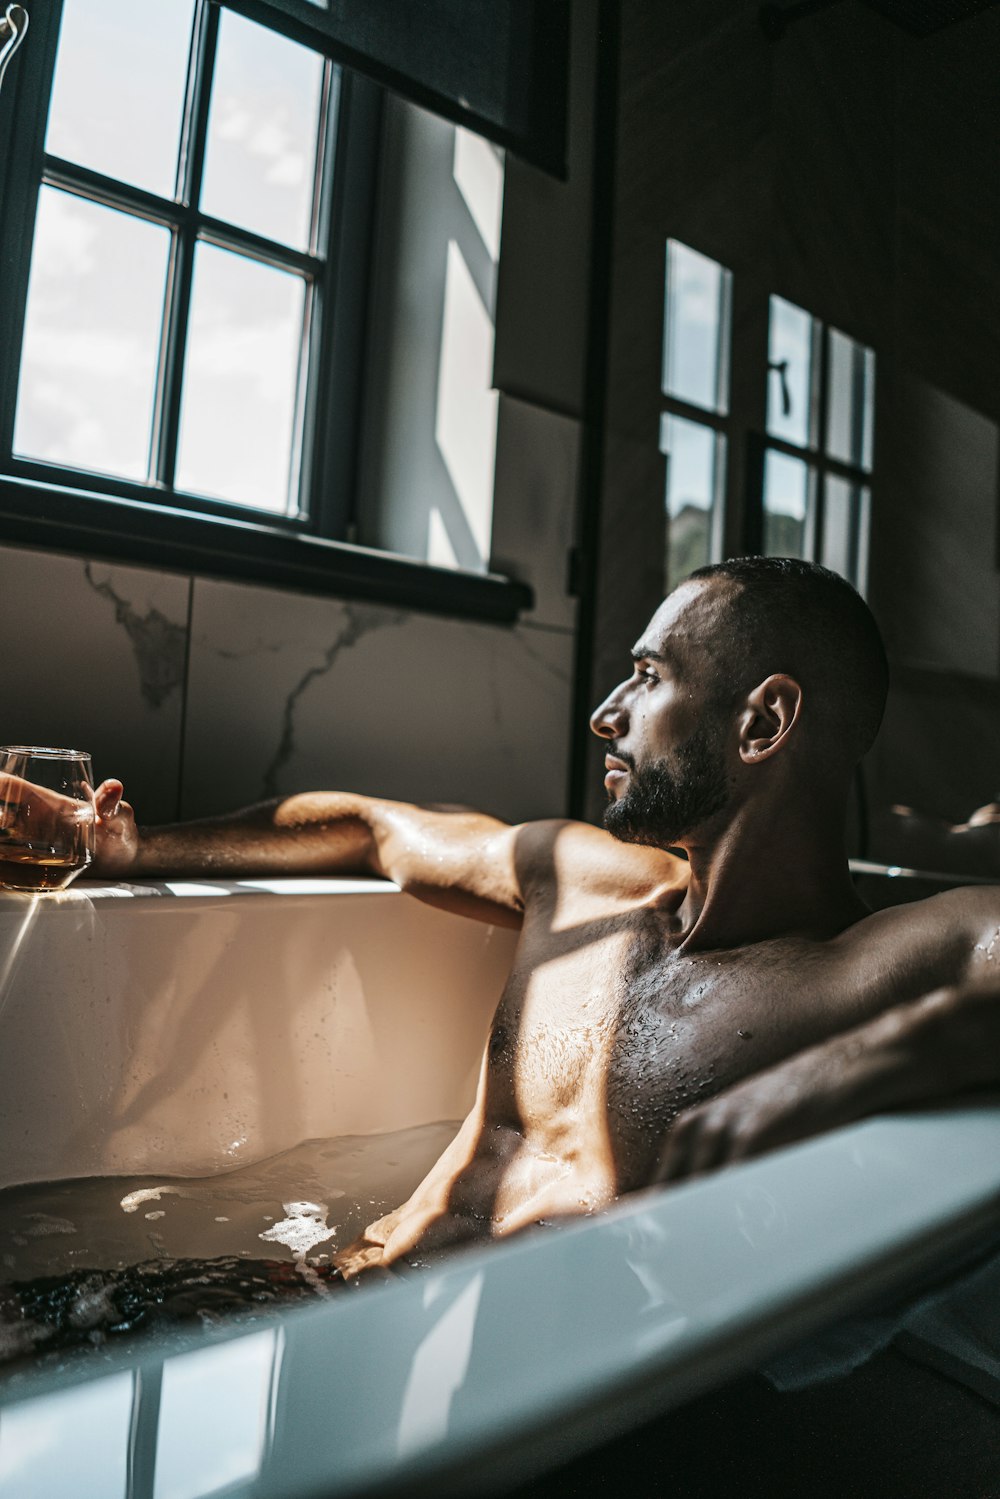 a man sitting in a bathtub holding a glass of wine